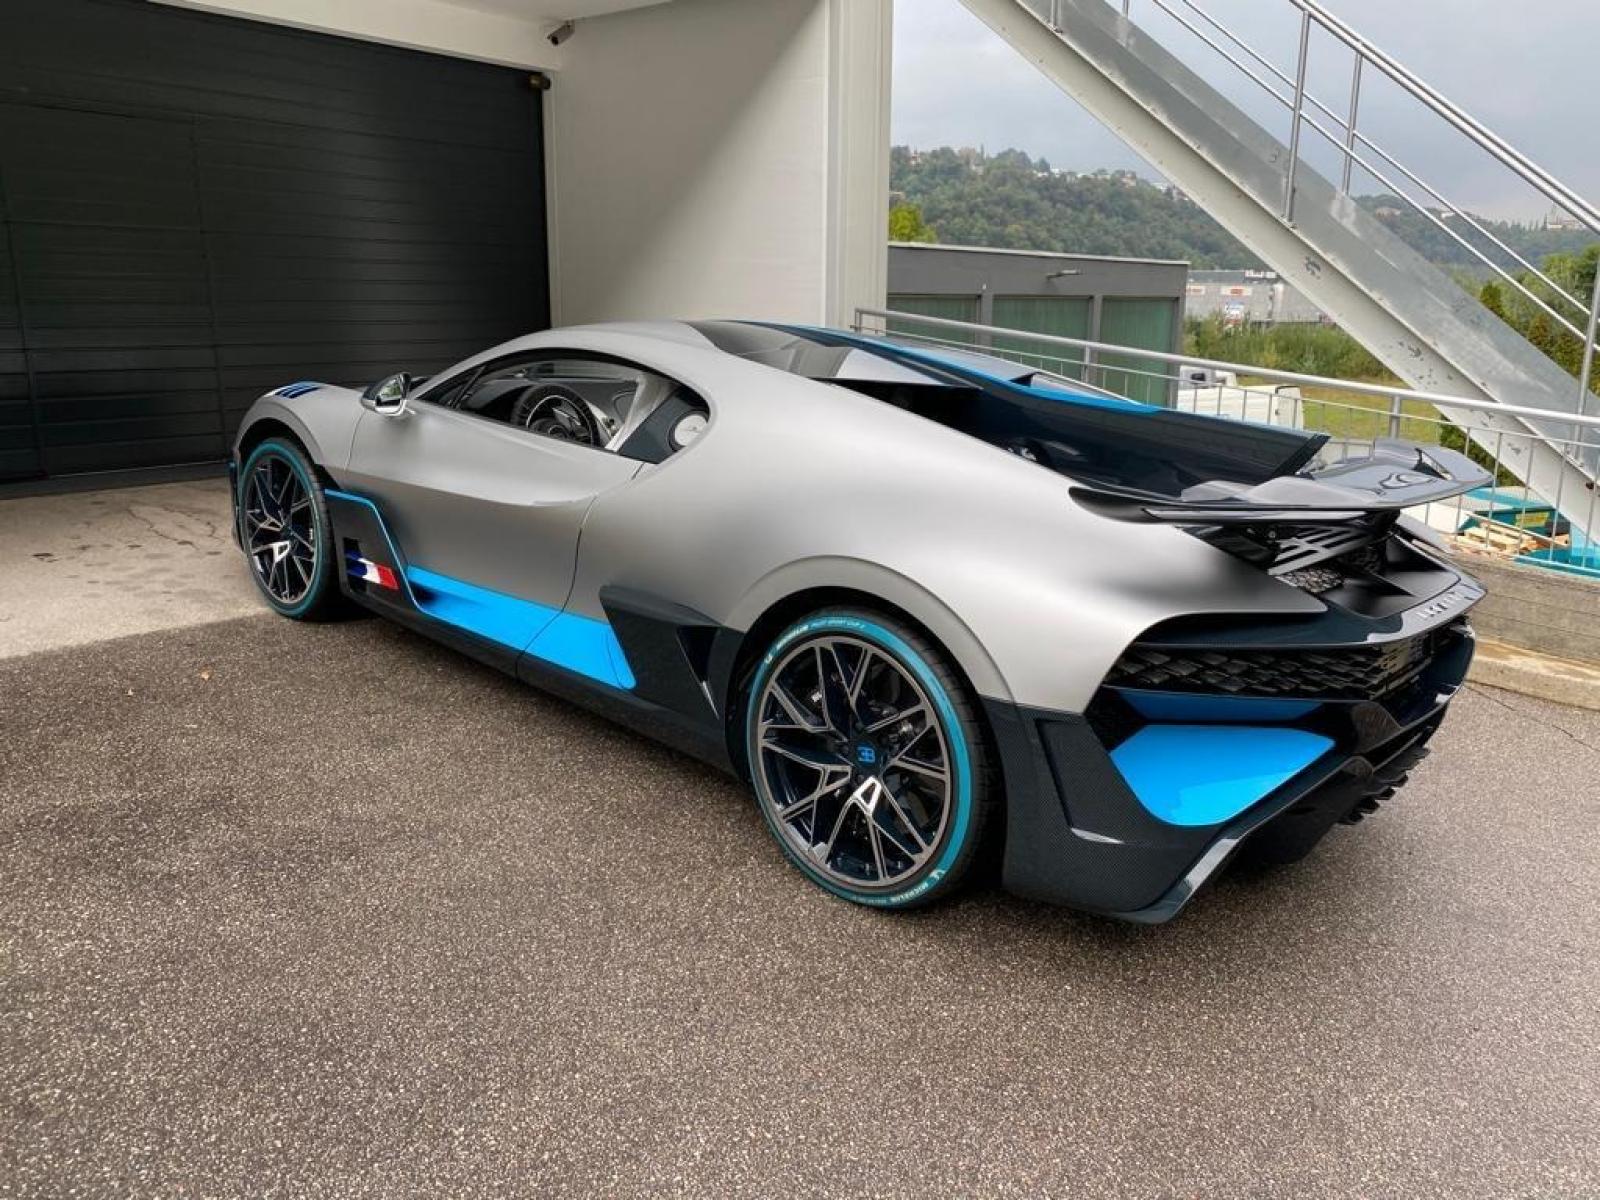 2020 Blue /Gray Bugatti Divo , 0.000000, 0.000000 - BUGATTI DIVO Argent matt / Divo Racing Blue, glossy / Divo Titanium Grey, Int Black / grey Brake caliper: Grey - Photo #2